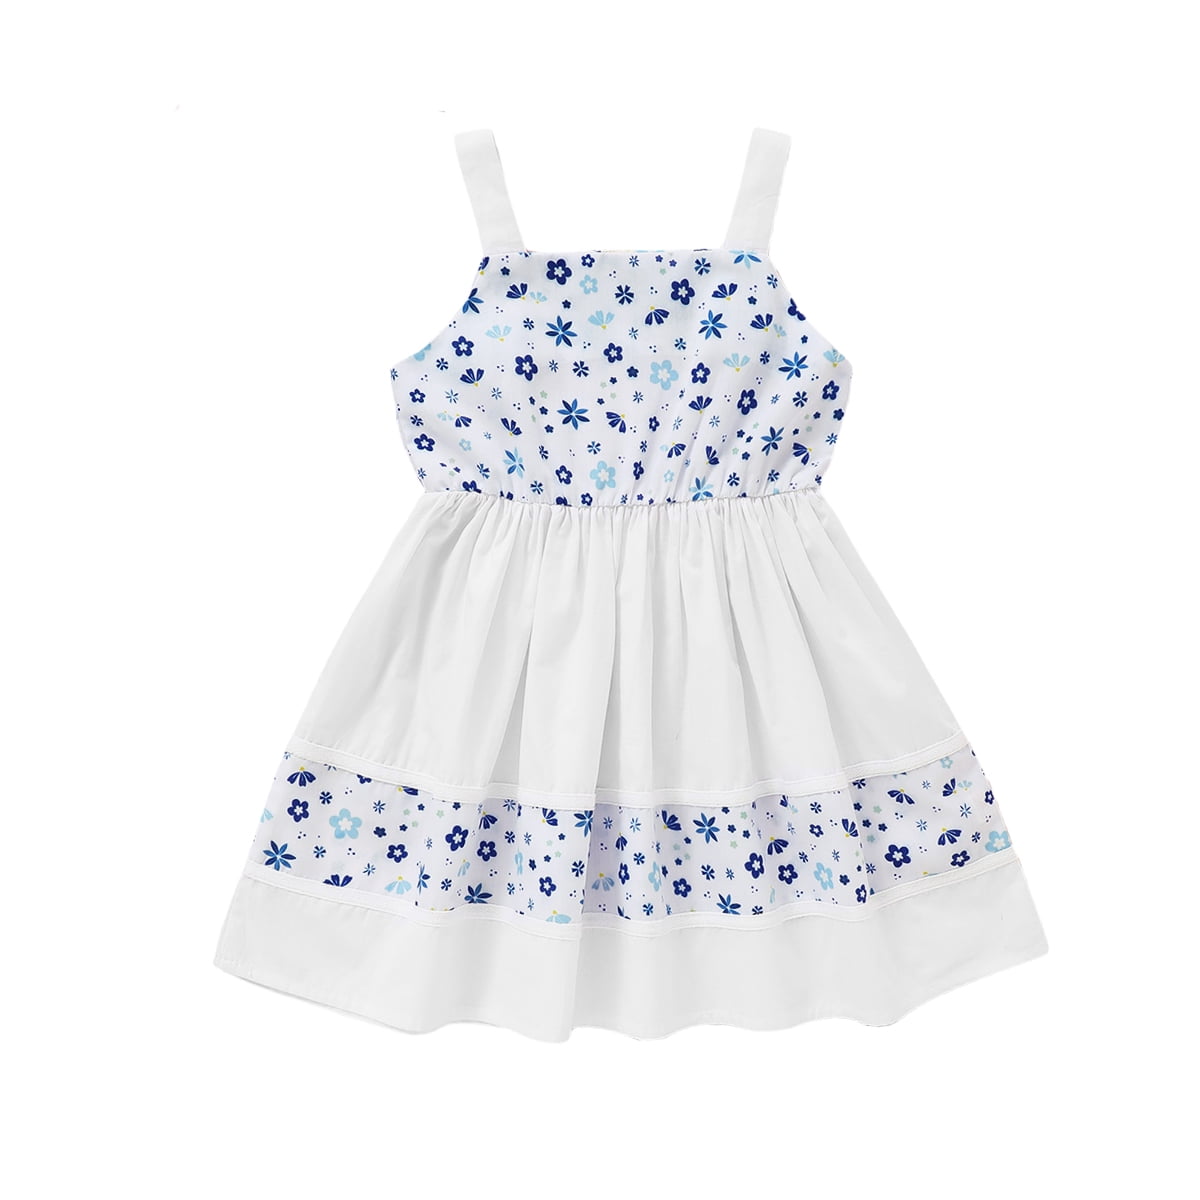 OLLUISNEO Toddler Baby Girls Dress 3T ...